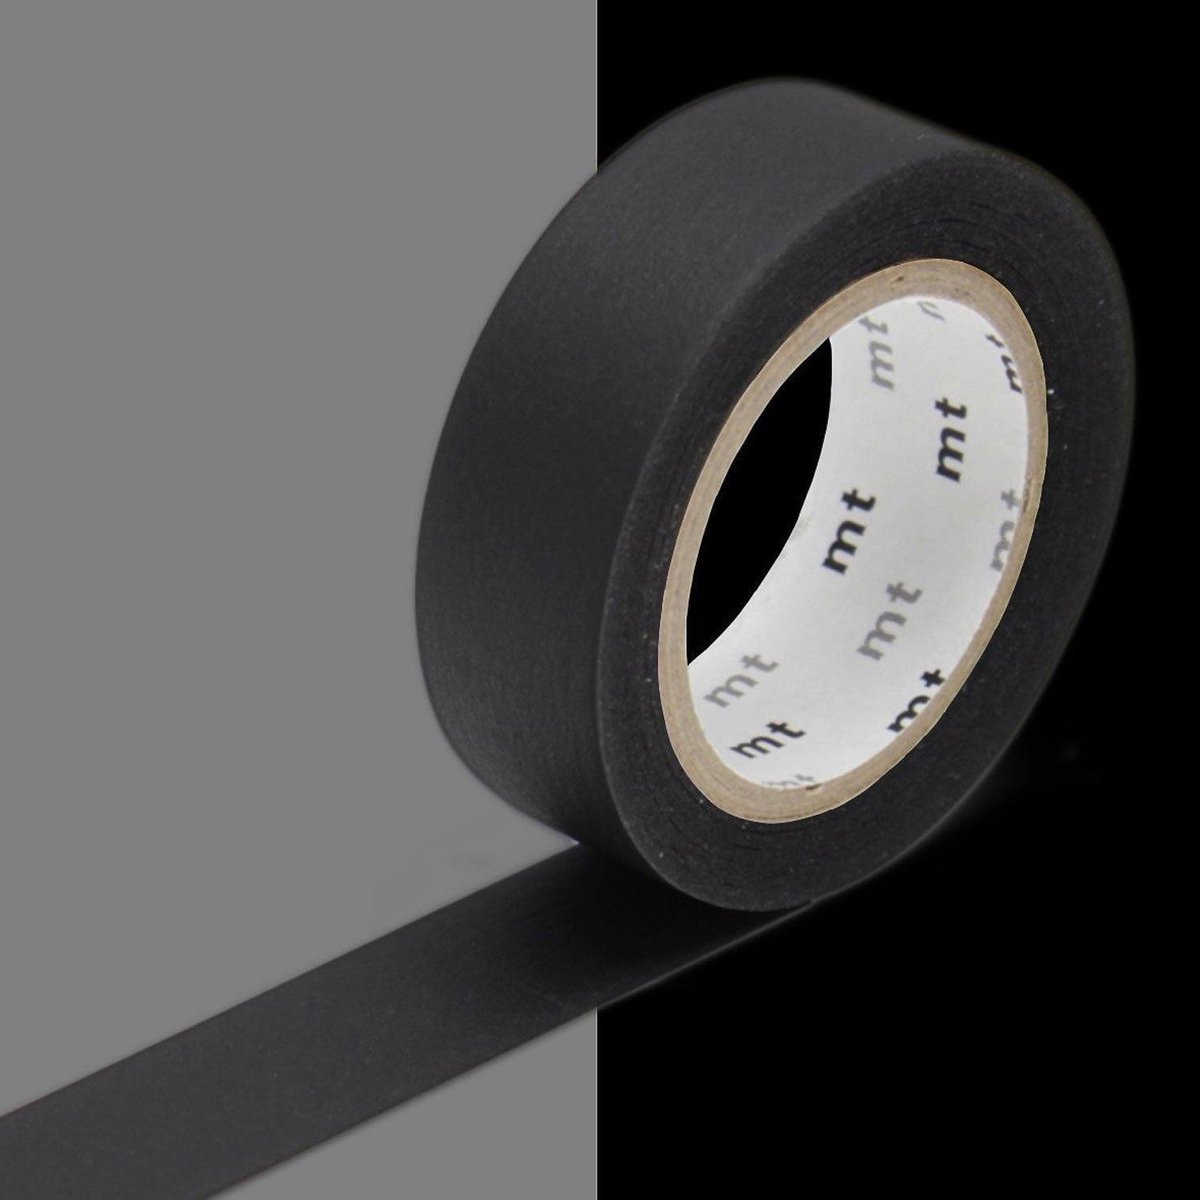 Masking Tape MT Casa 10 cm Uni noir mat Masking Tape MT